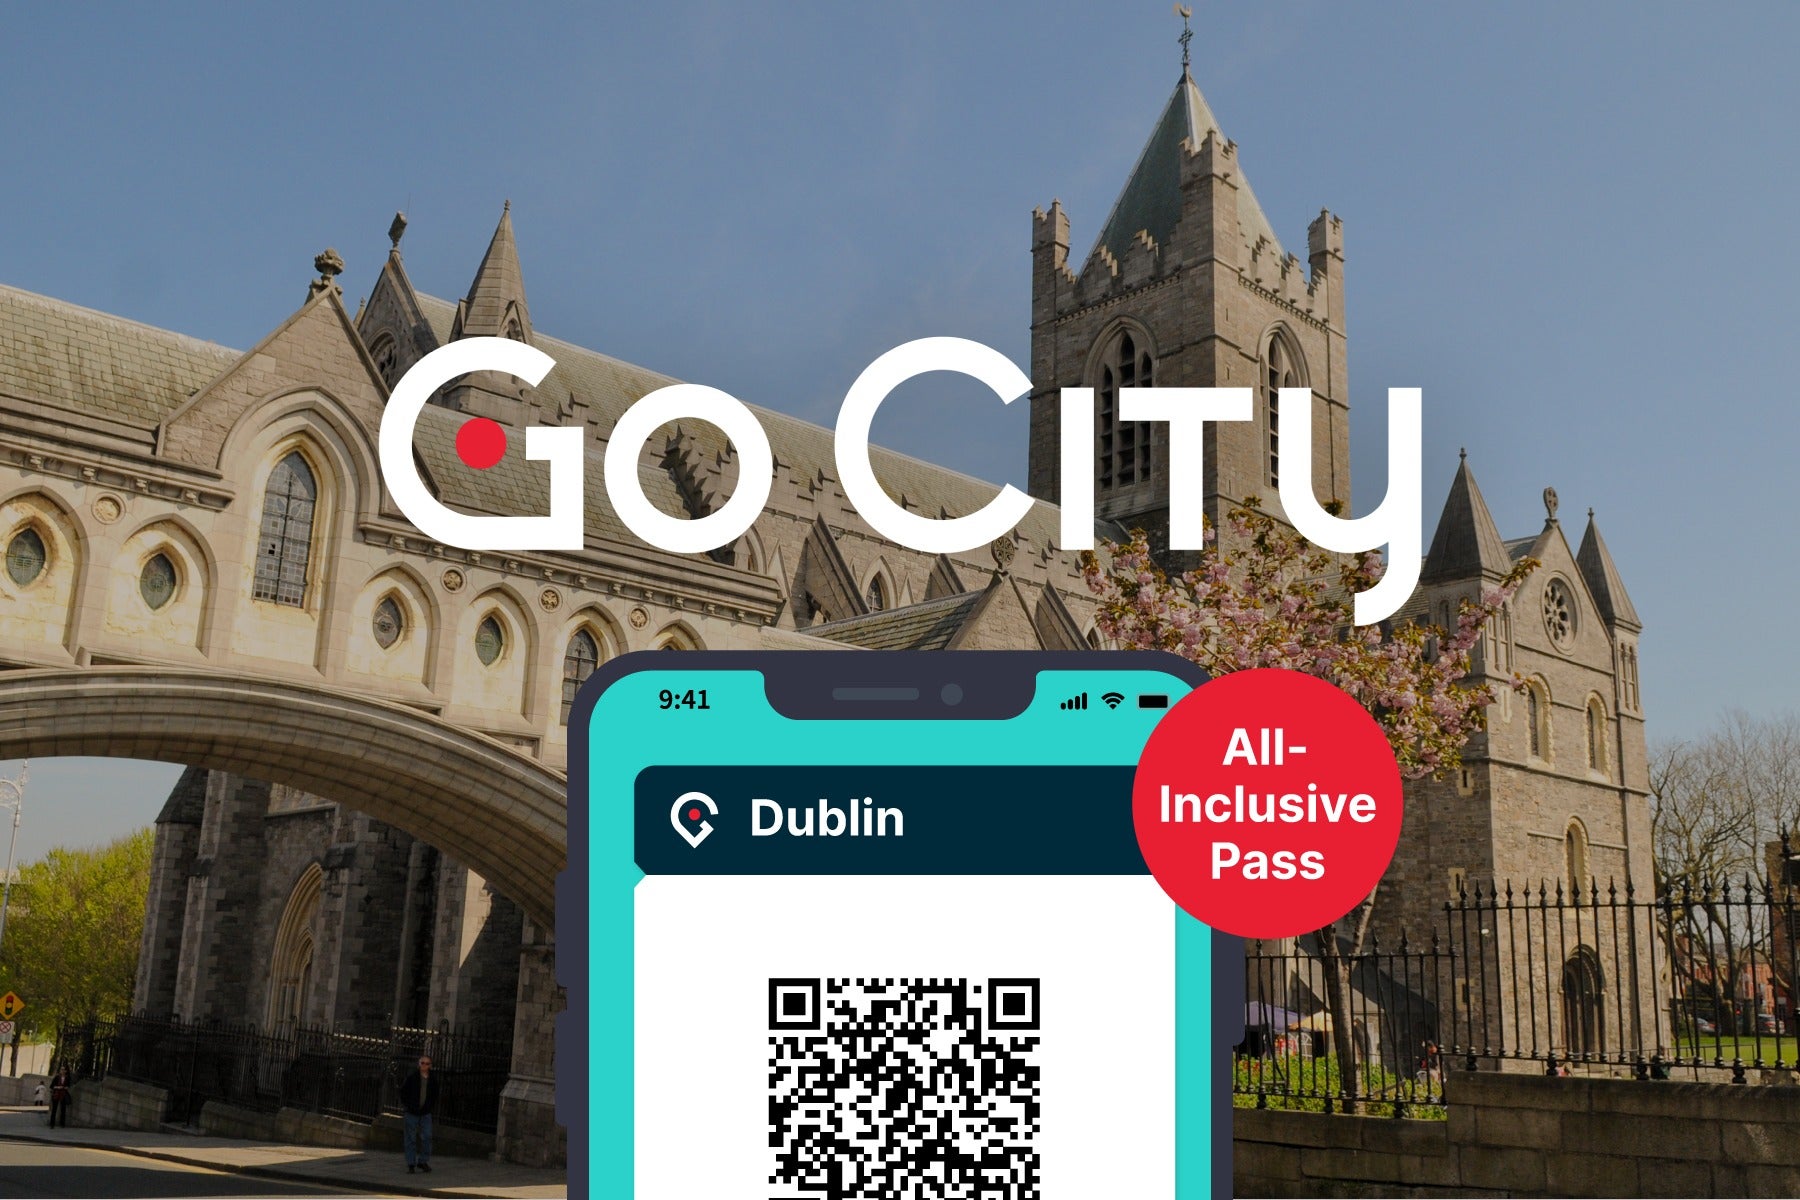 Go City: Dublin All-Inclusive Pass